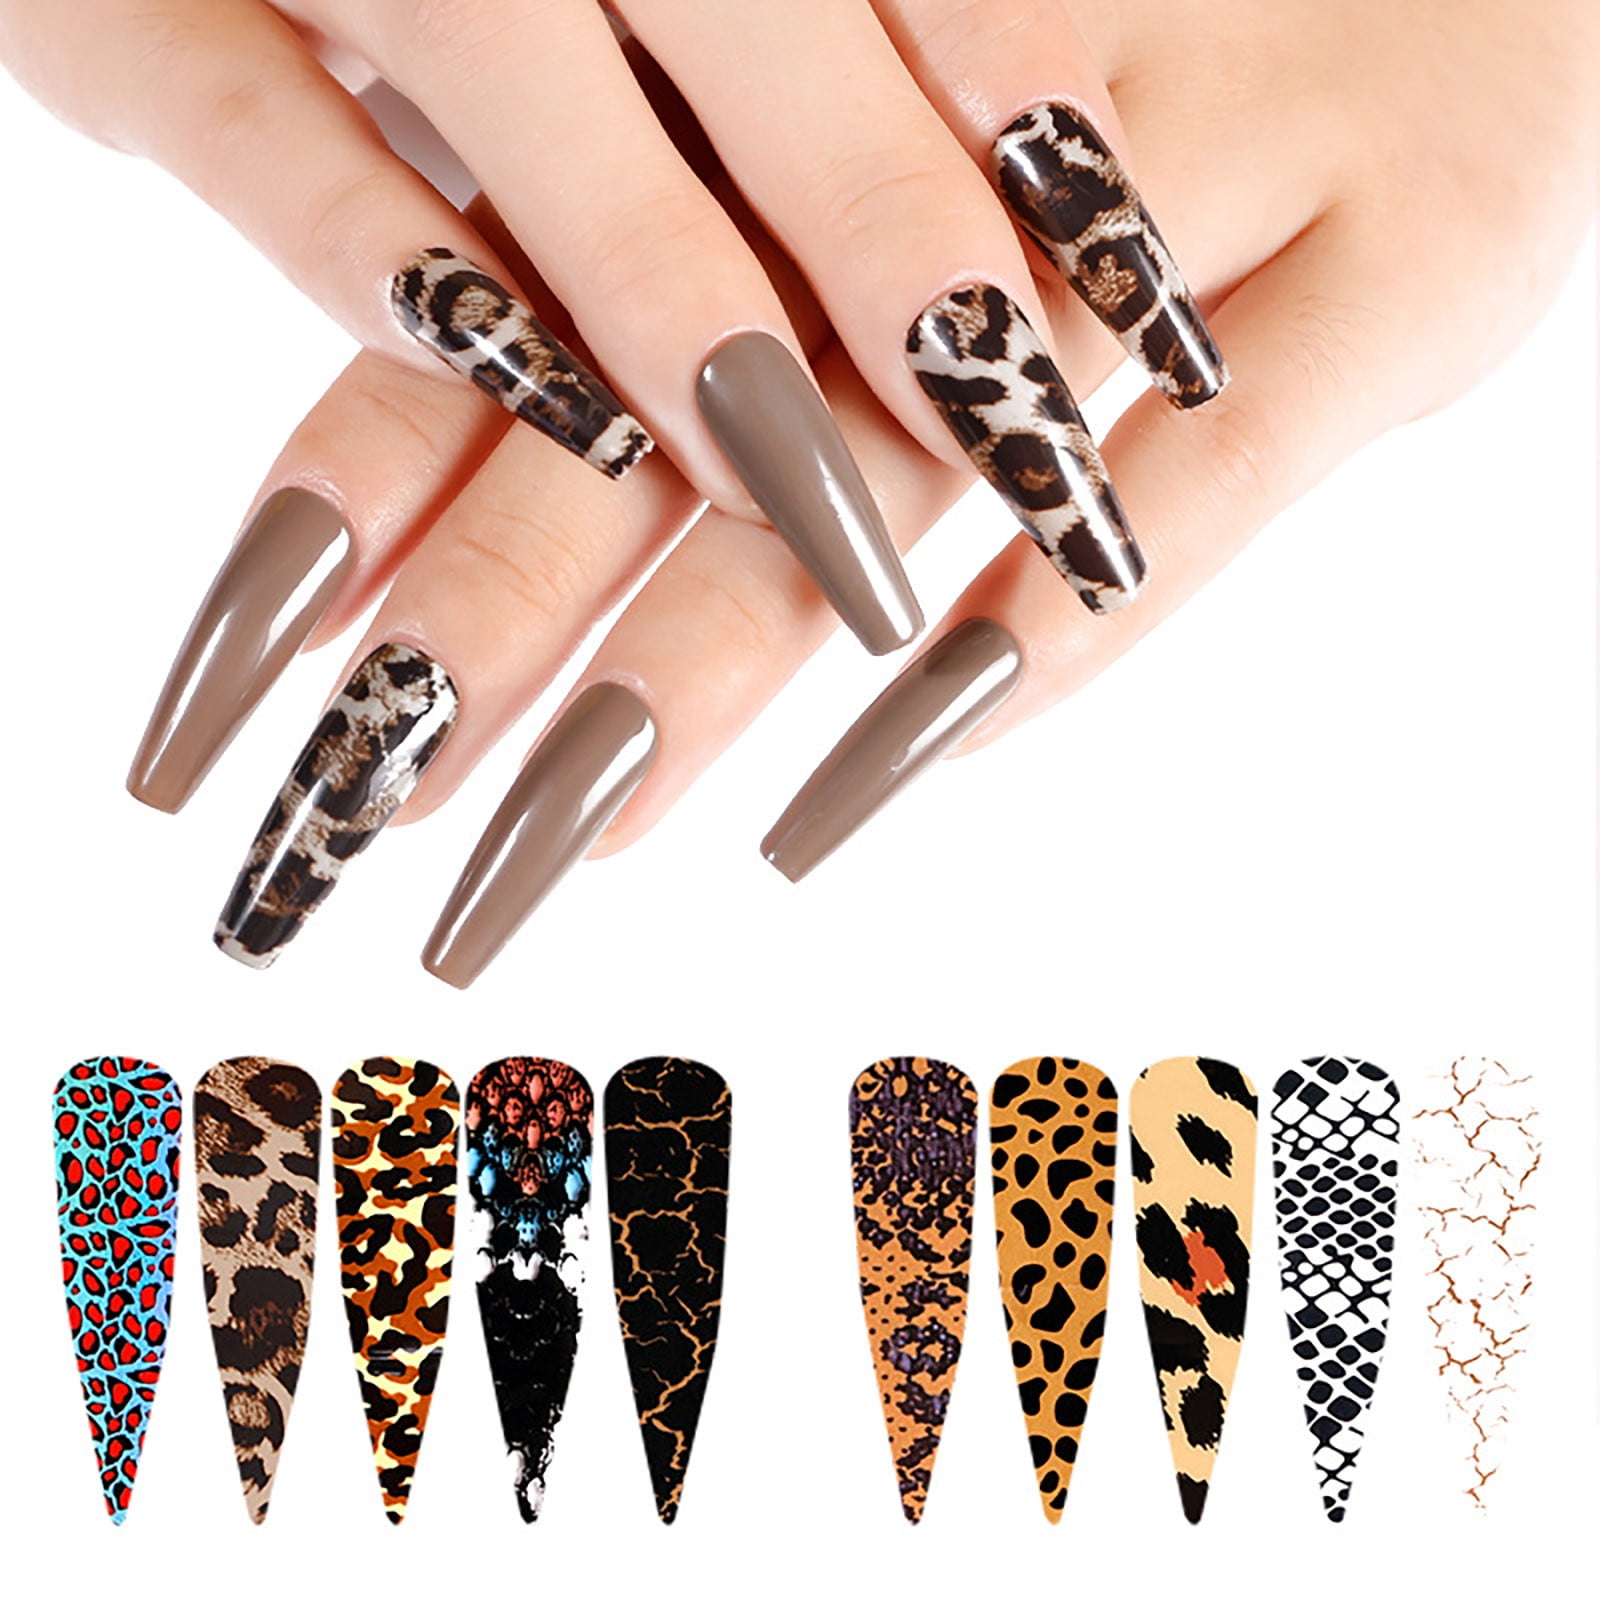 Summer Nail Designs You'll Probably Want To Wear : Leopard print short nails  | Short nail designs, Cute short nails, Nail designs spring